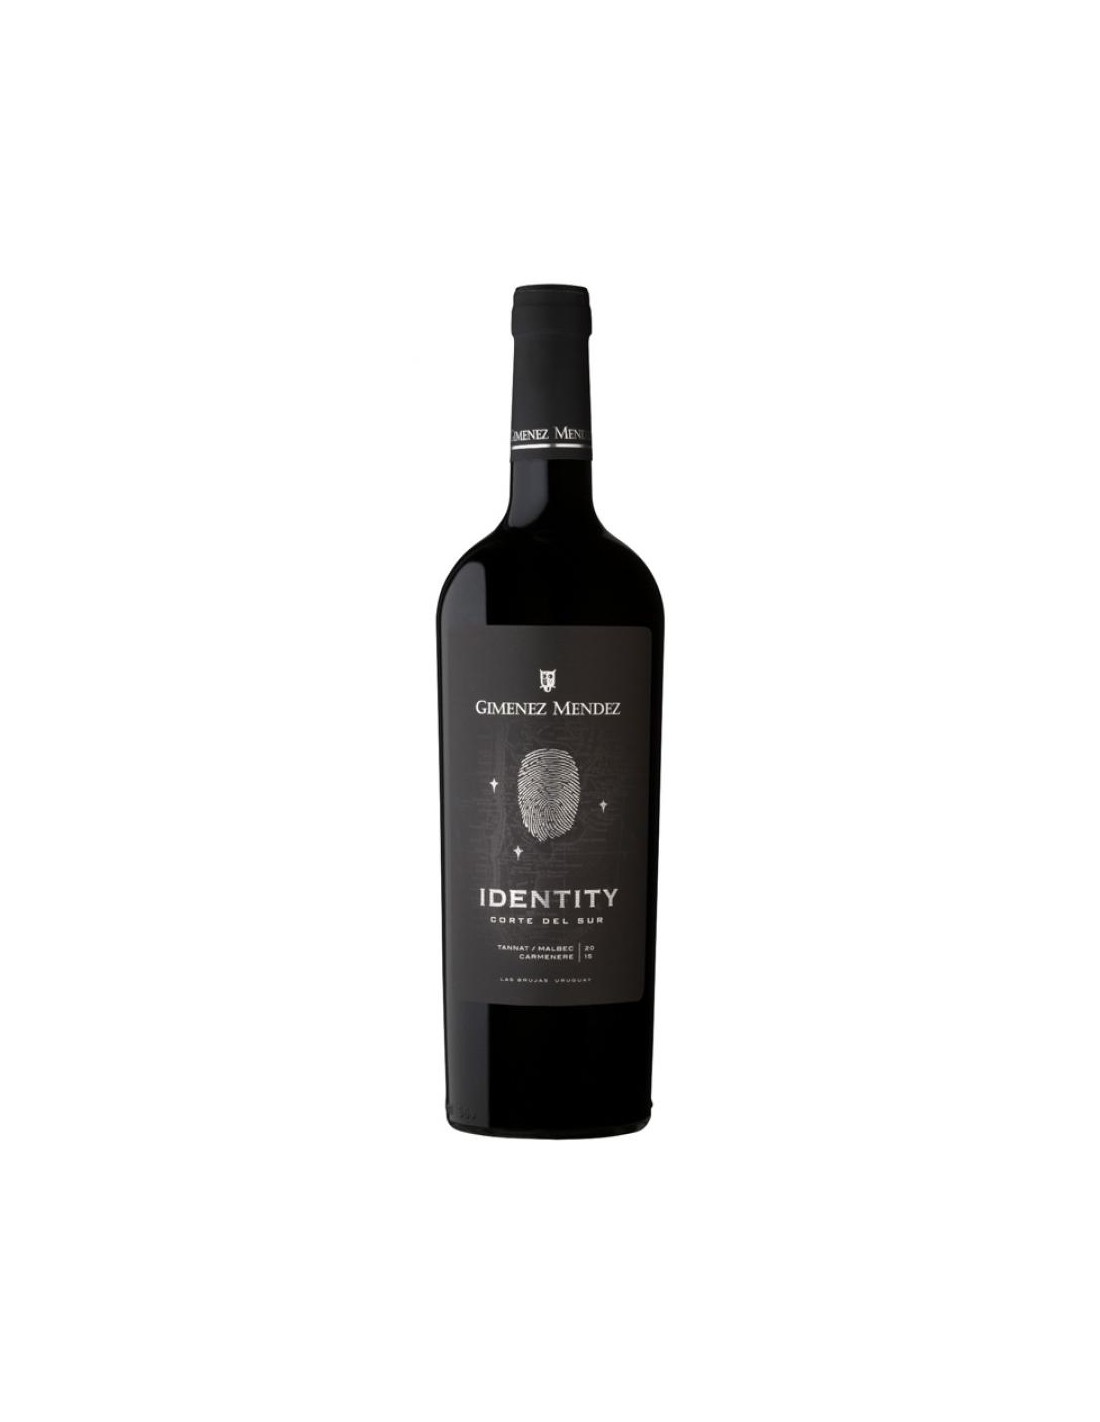 Vin rosu sec, Gimenez Mendez Identity, 0.75L, 14.5% alc., Uruguay alcooldiscount.ro